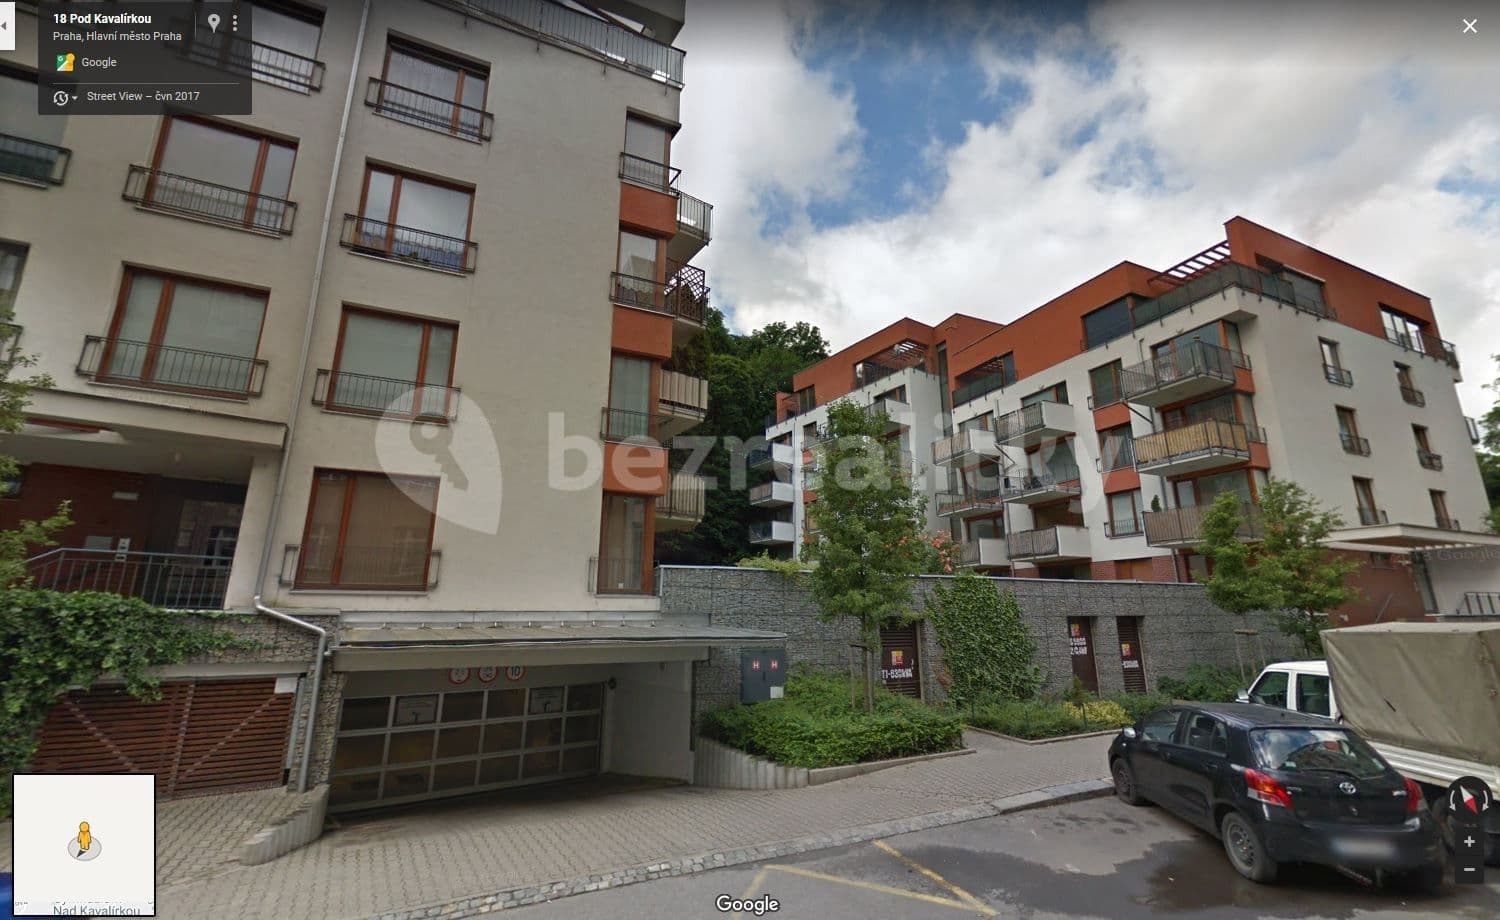 Pronájem bytu 2+kk 59 m², Pod Kavalírkou, Praha, Praha